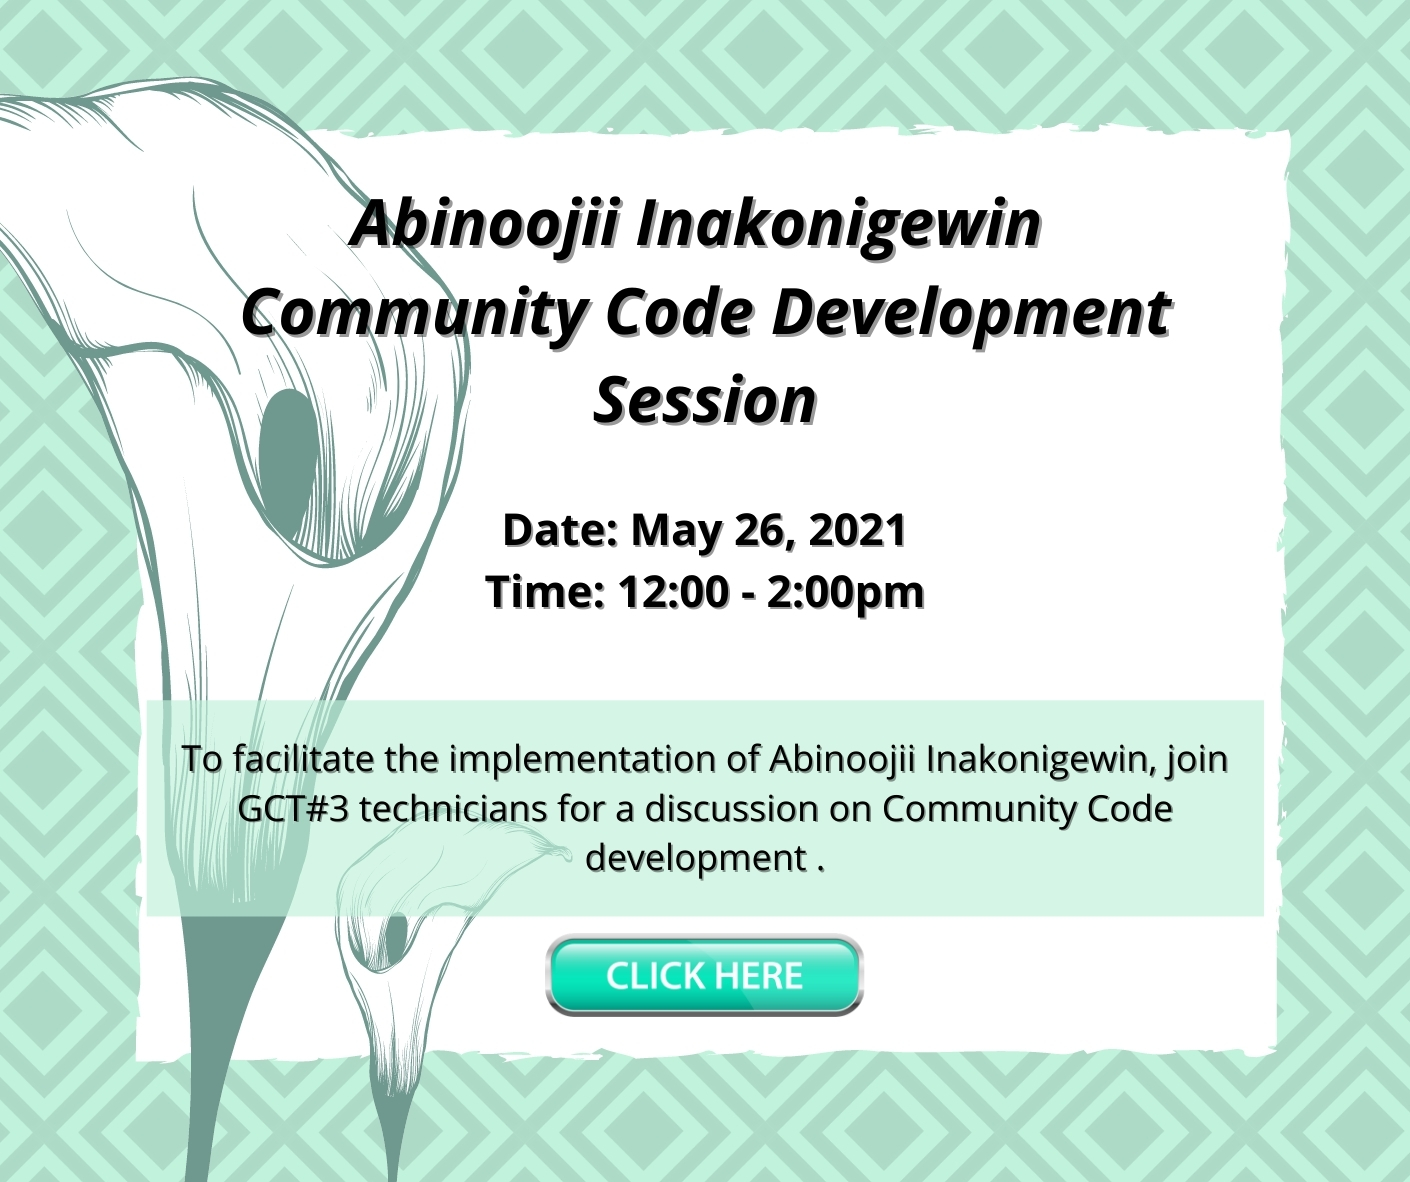 Abinoojii Inakonigewin Community Code Development Session